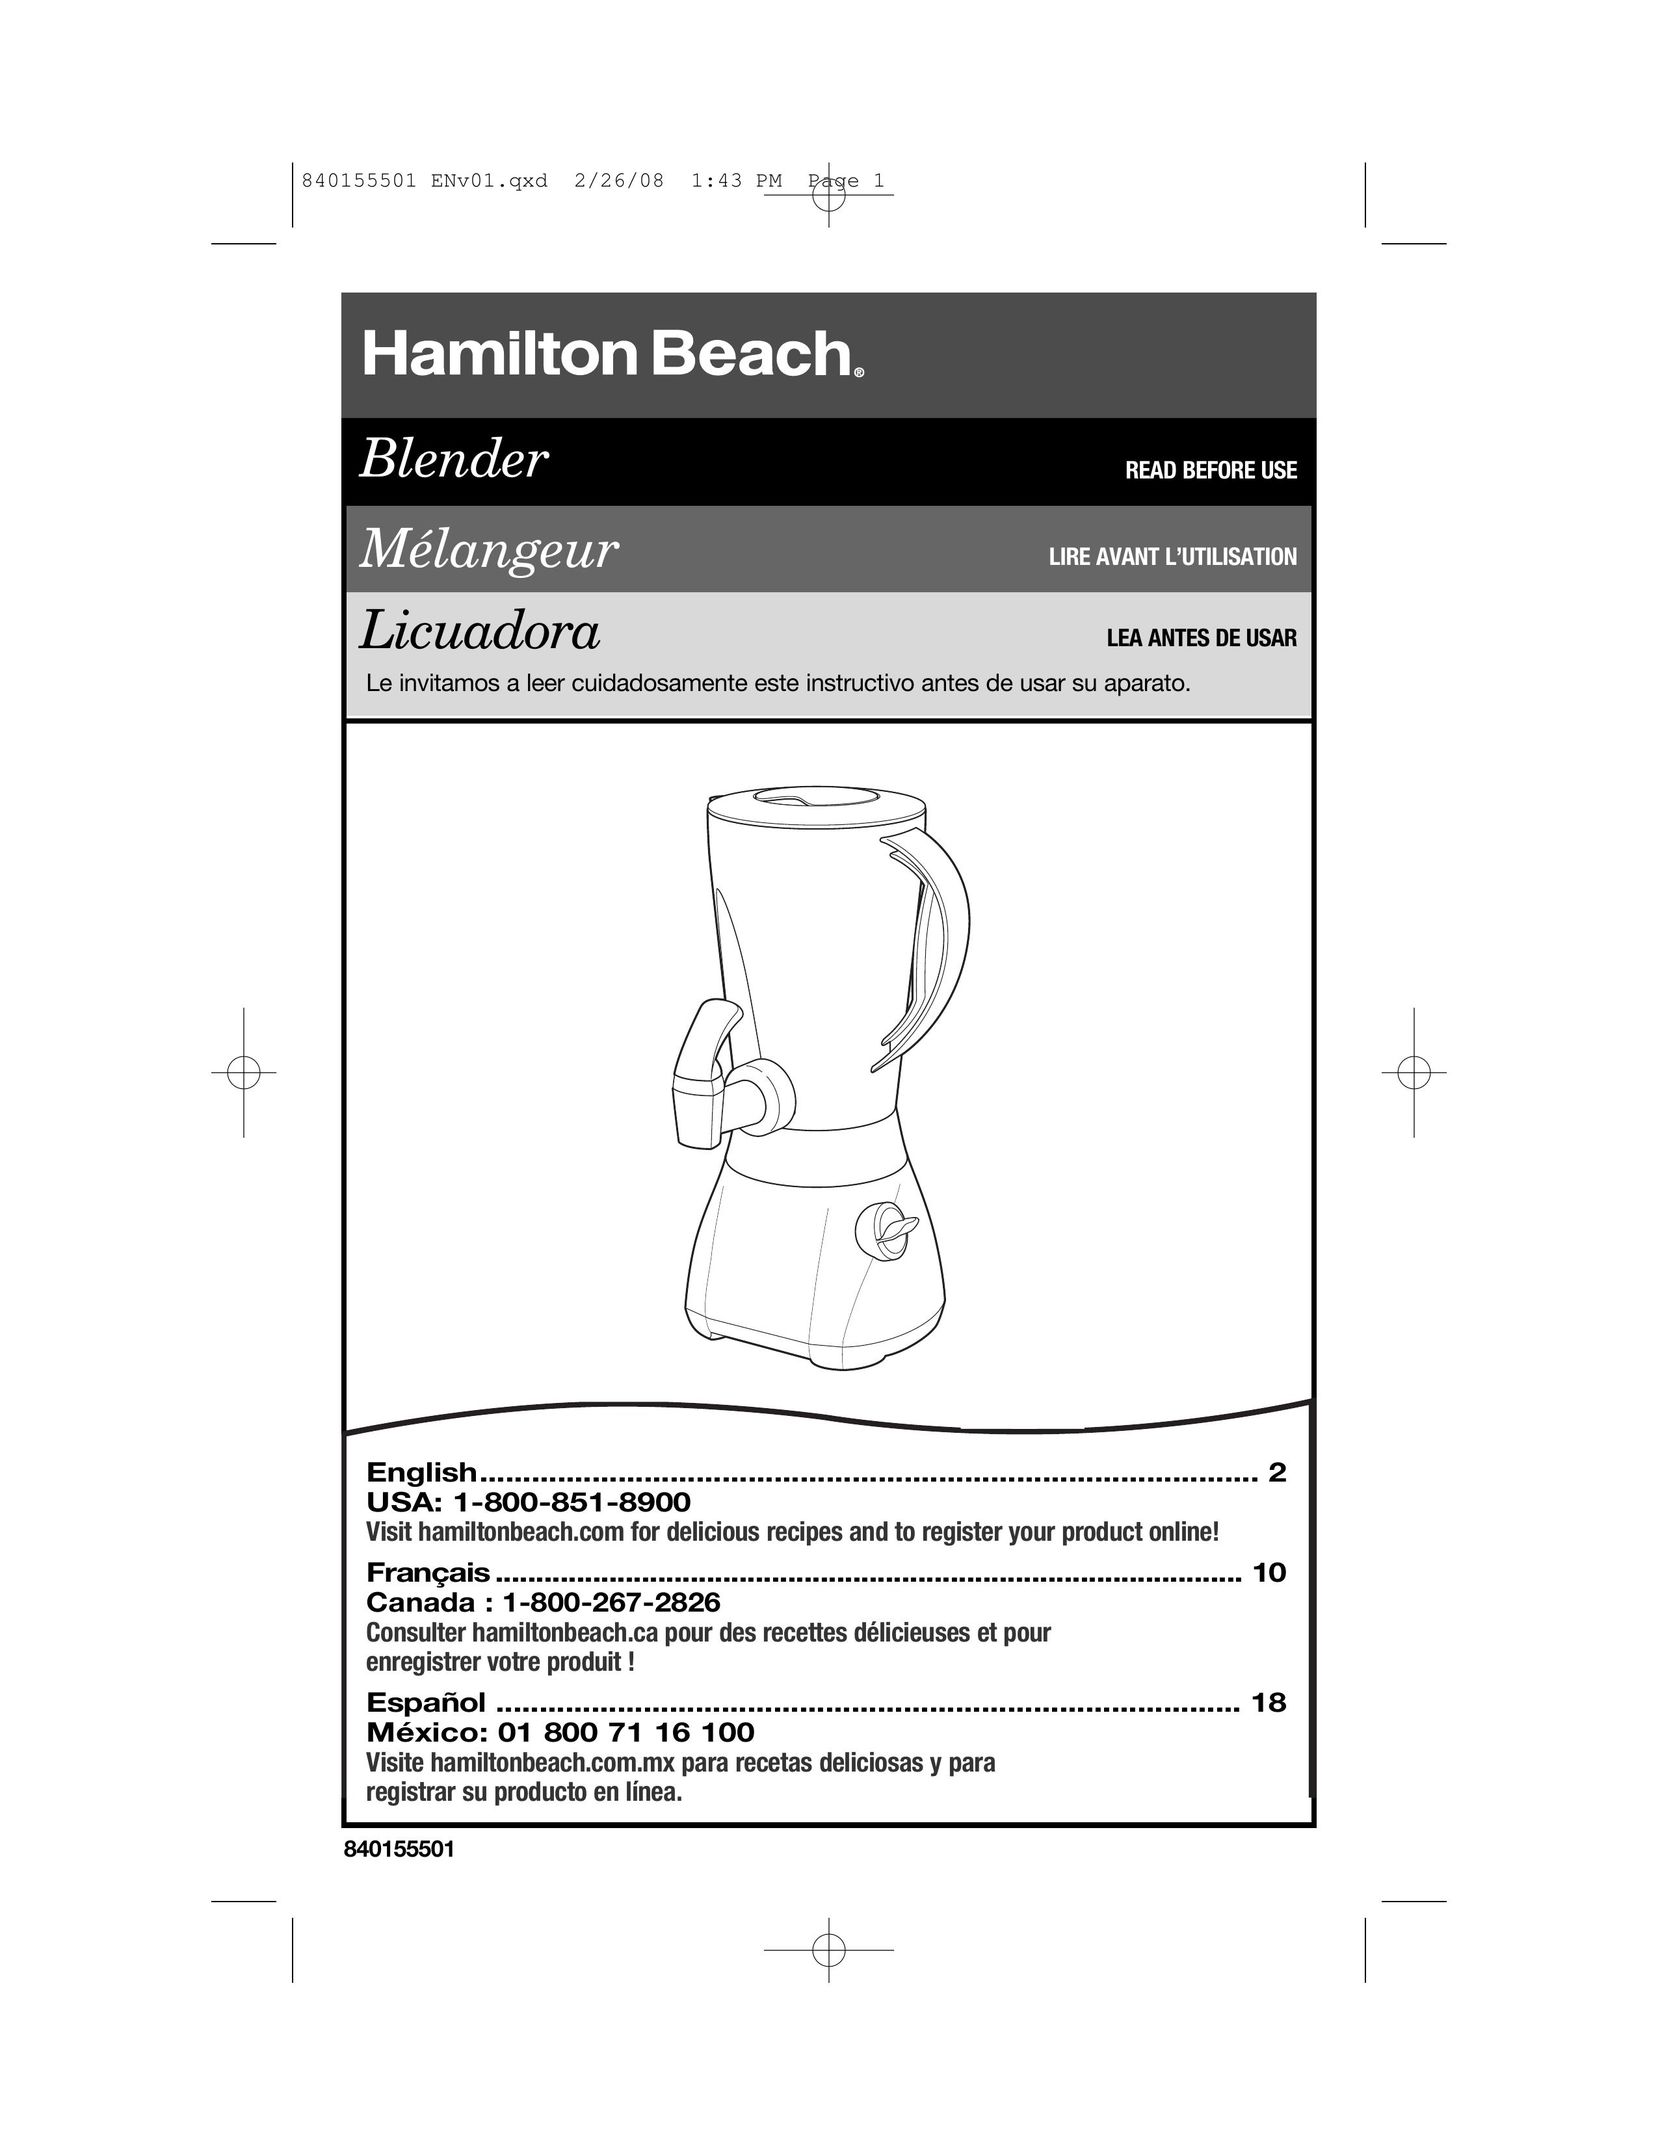 Hamilton Beach 54616C Blender User Manual